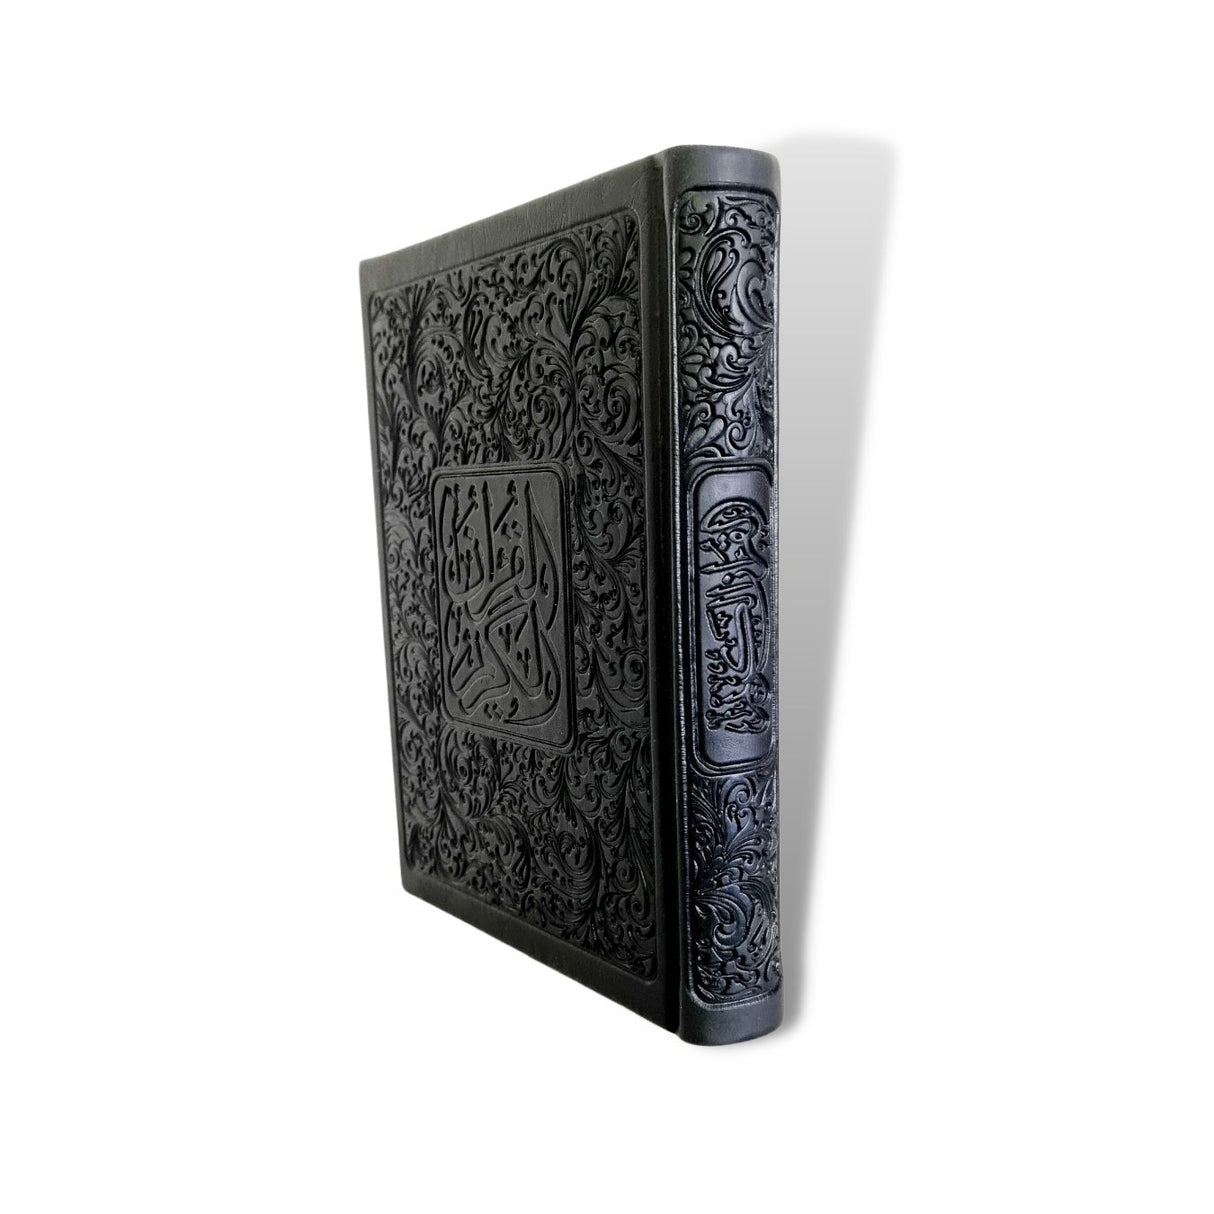 Quran 14.5x20.5cm A5, Black - Cream pages, Arabic Text Uthmani Script Cover Design